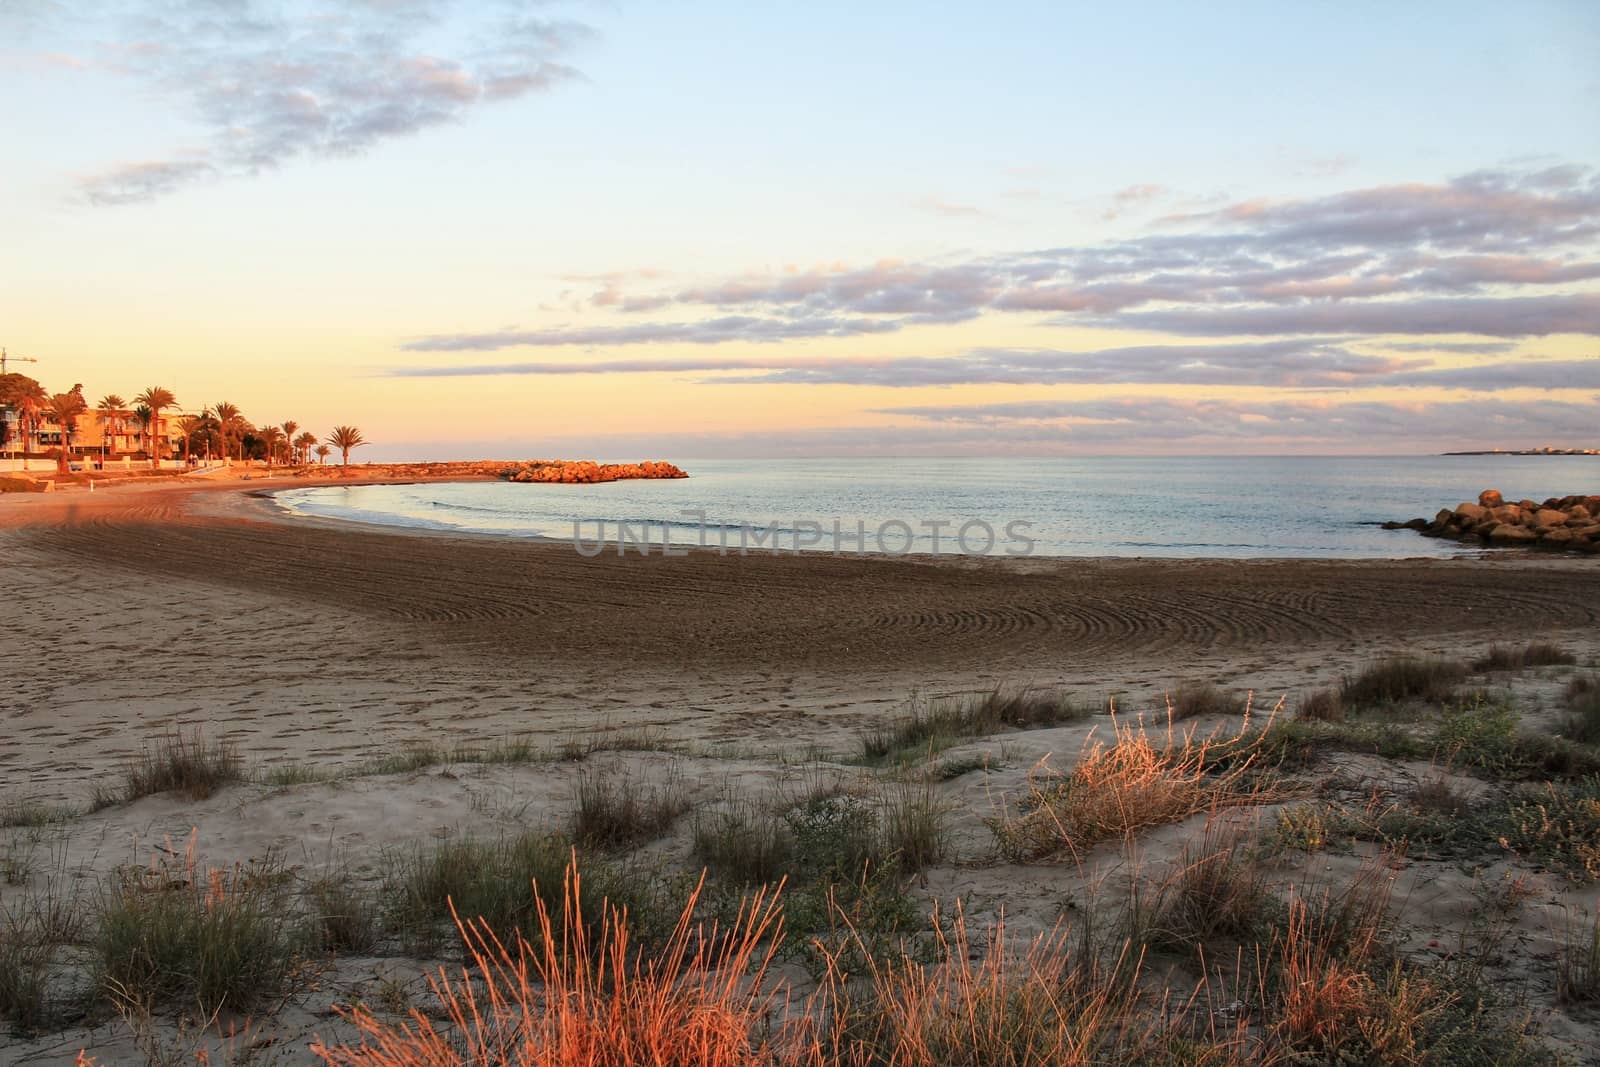 Sunset on the beach in Santa Pola, Alicante Spain by soniabonet